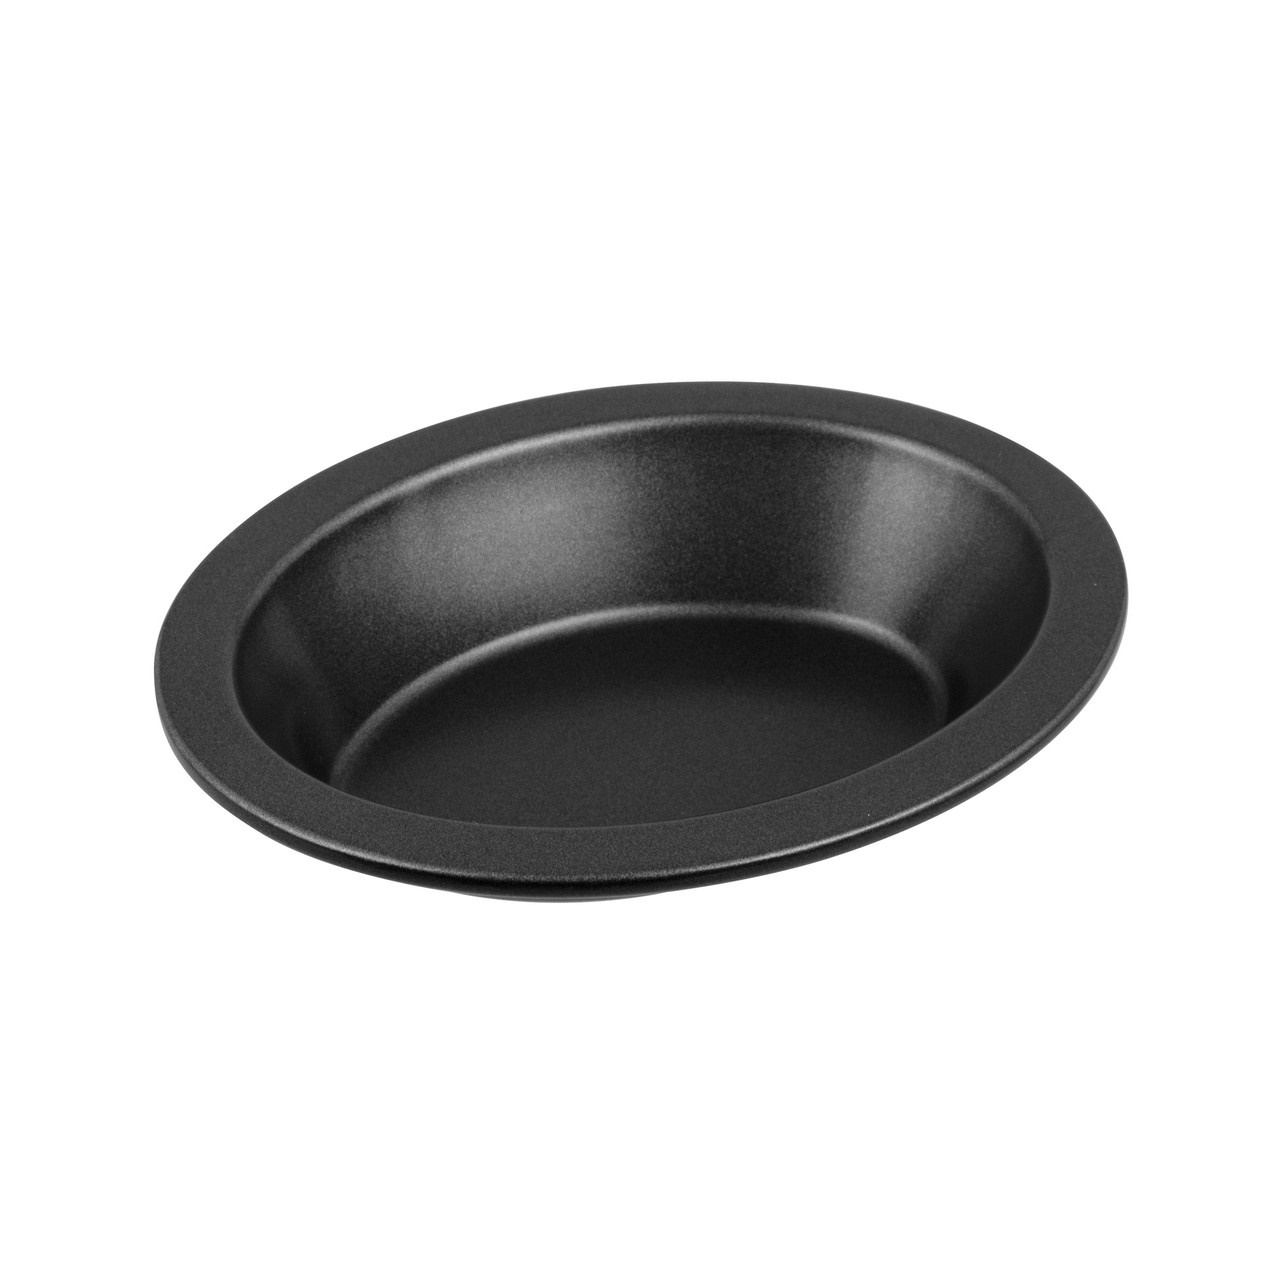 Bakemaster Oval Pie Dish Set Of 4 16 X 12.5 X 3cm - Non-stick